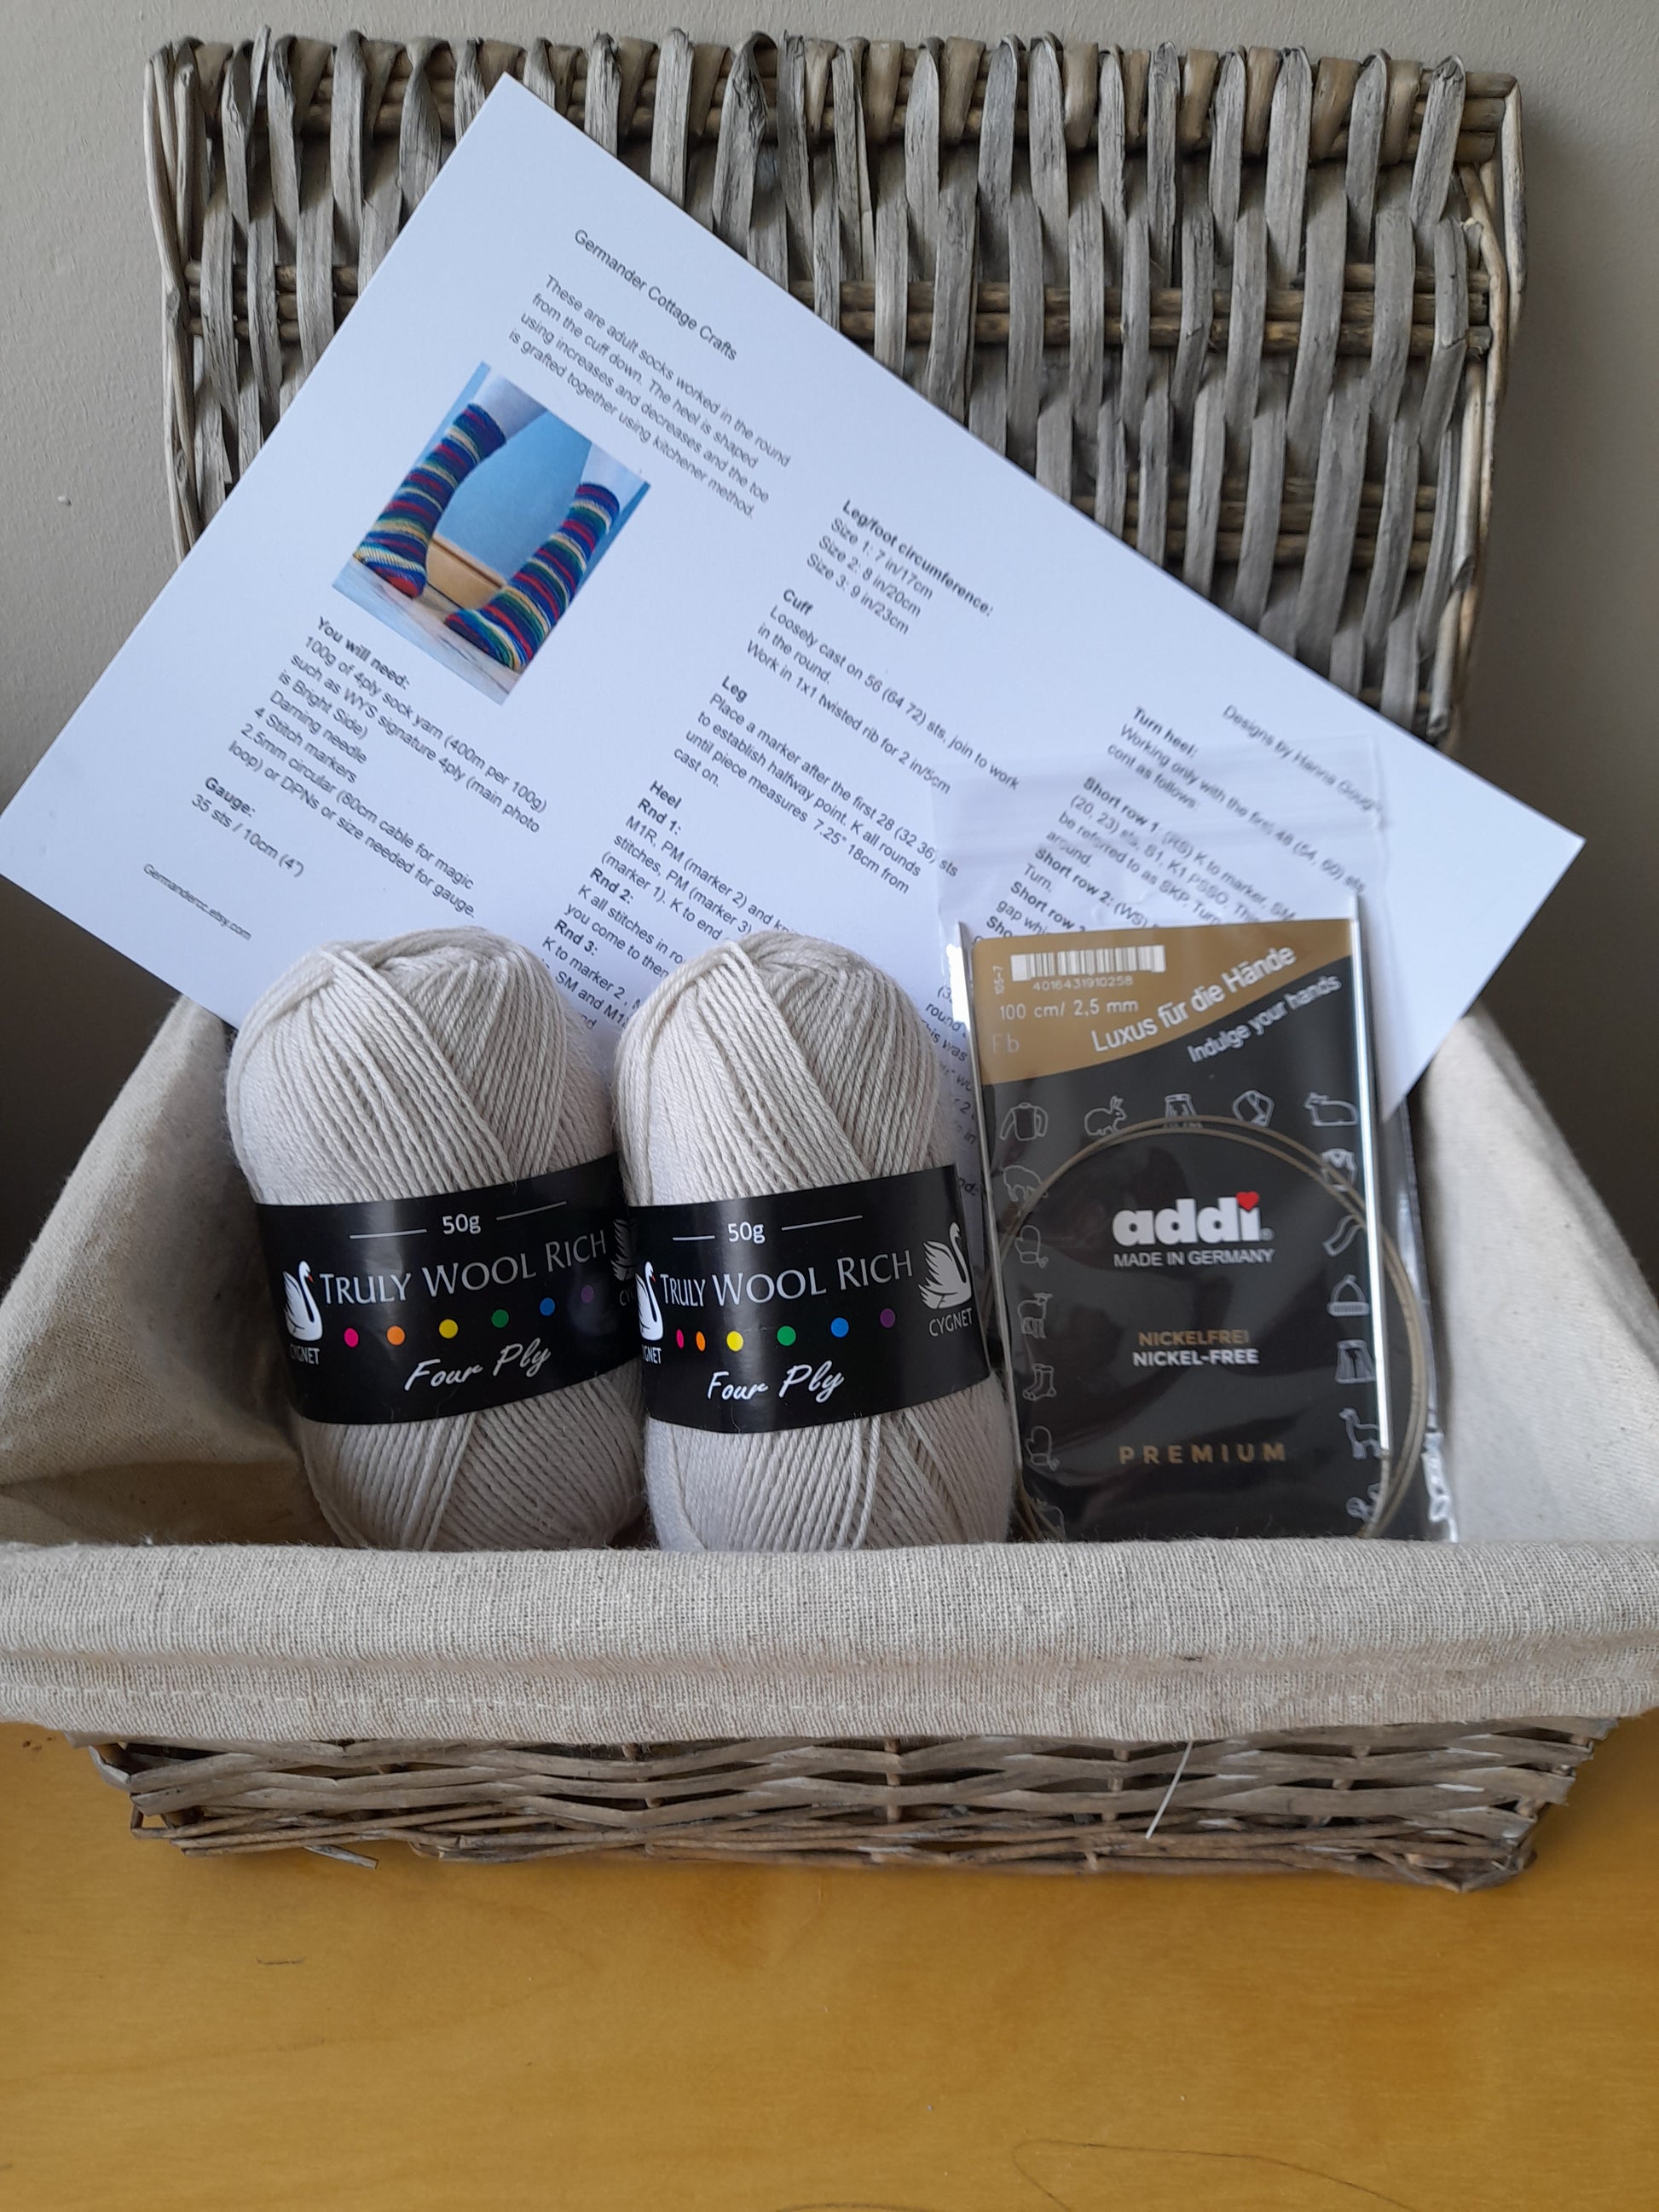 Knit your own socks kit